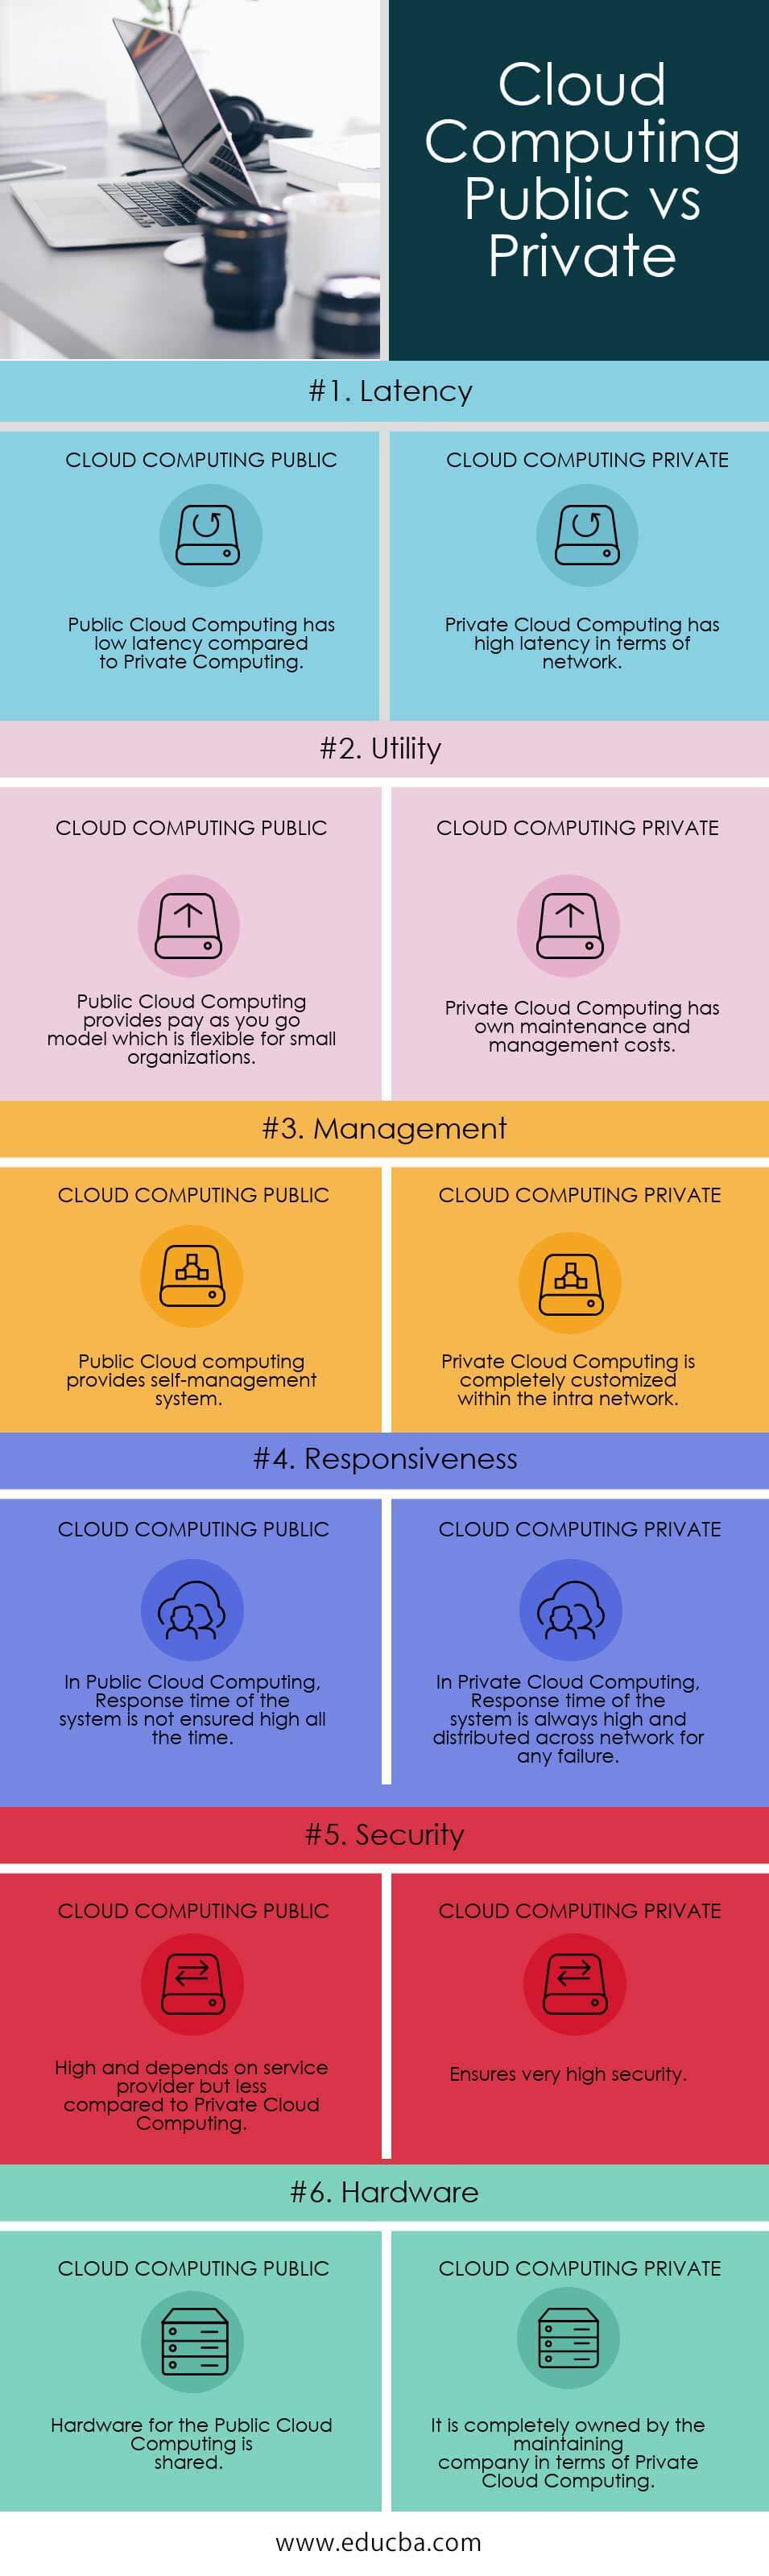 Cloud Computing Public vs Private info